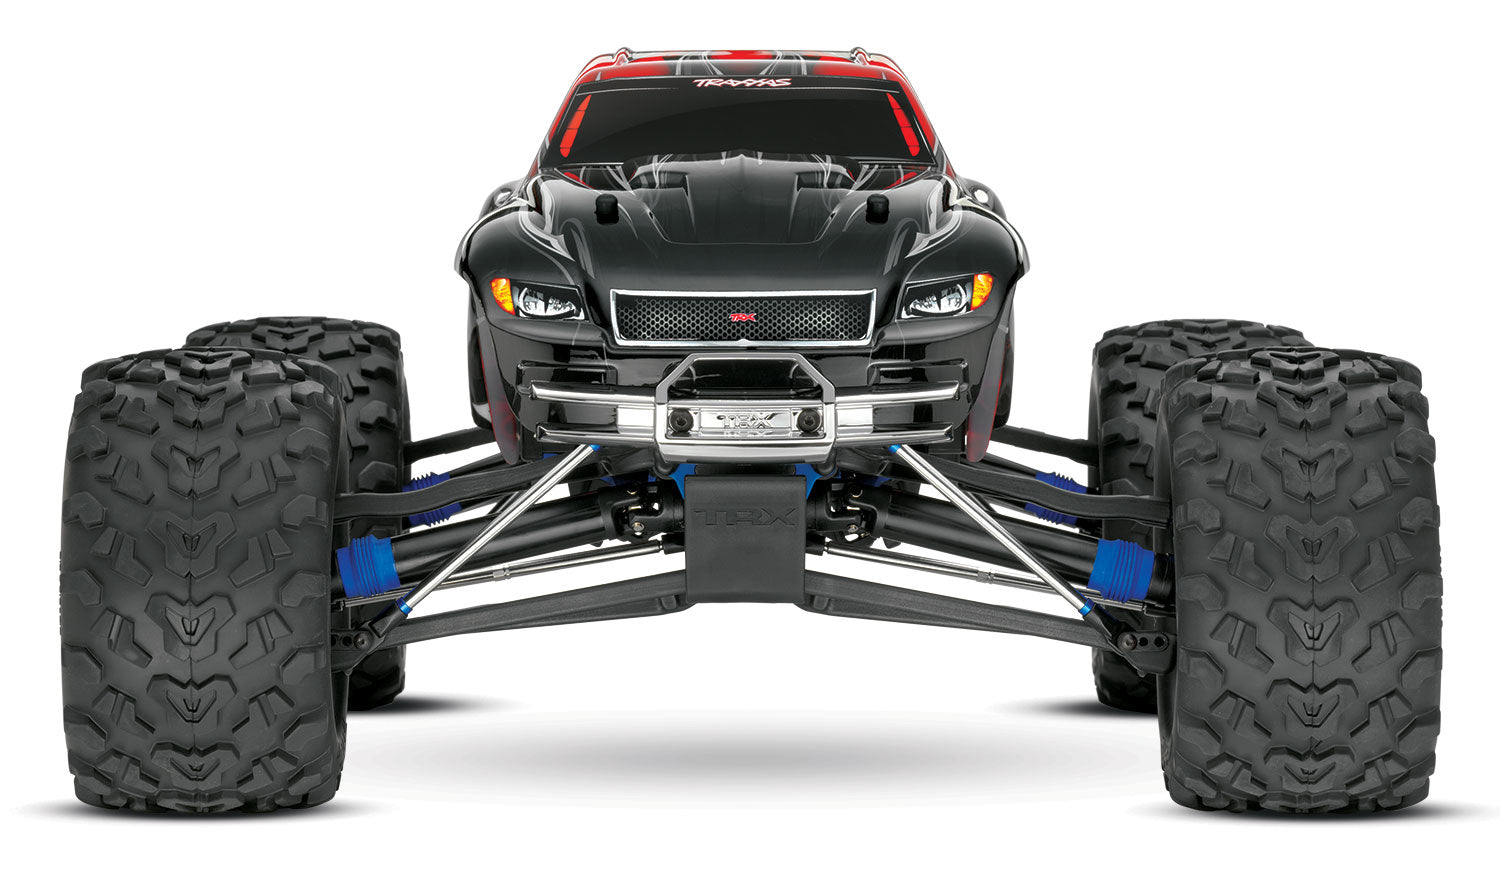 Traxxas Revo 3.3 4WD RTR Nitro Monster Truck